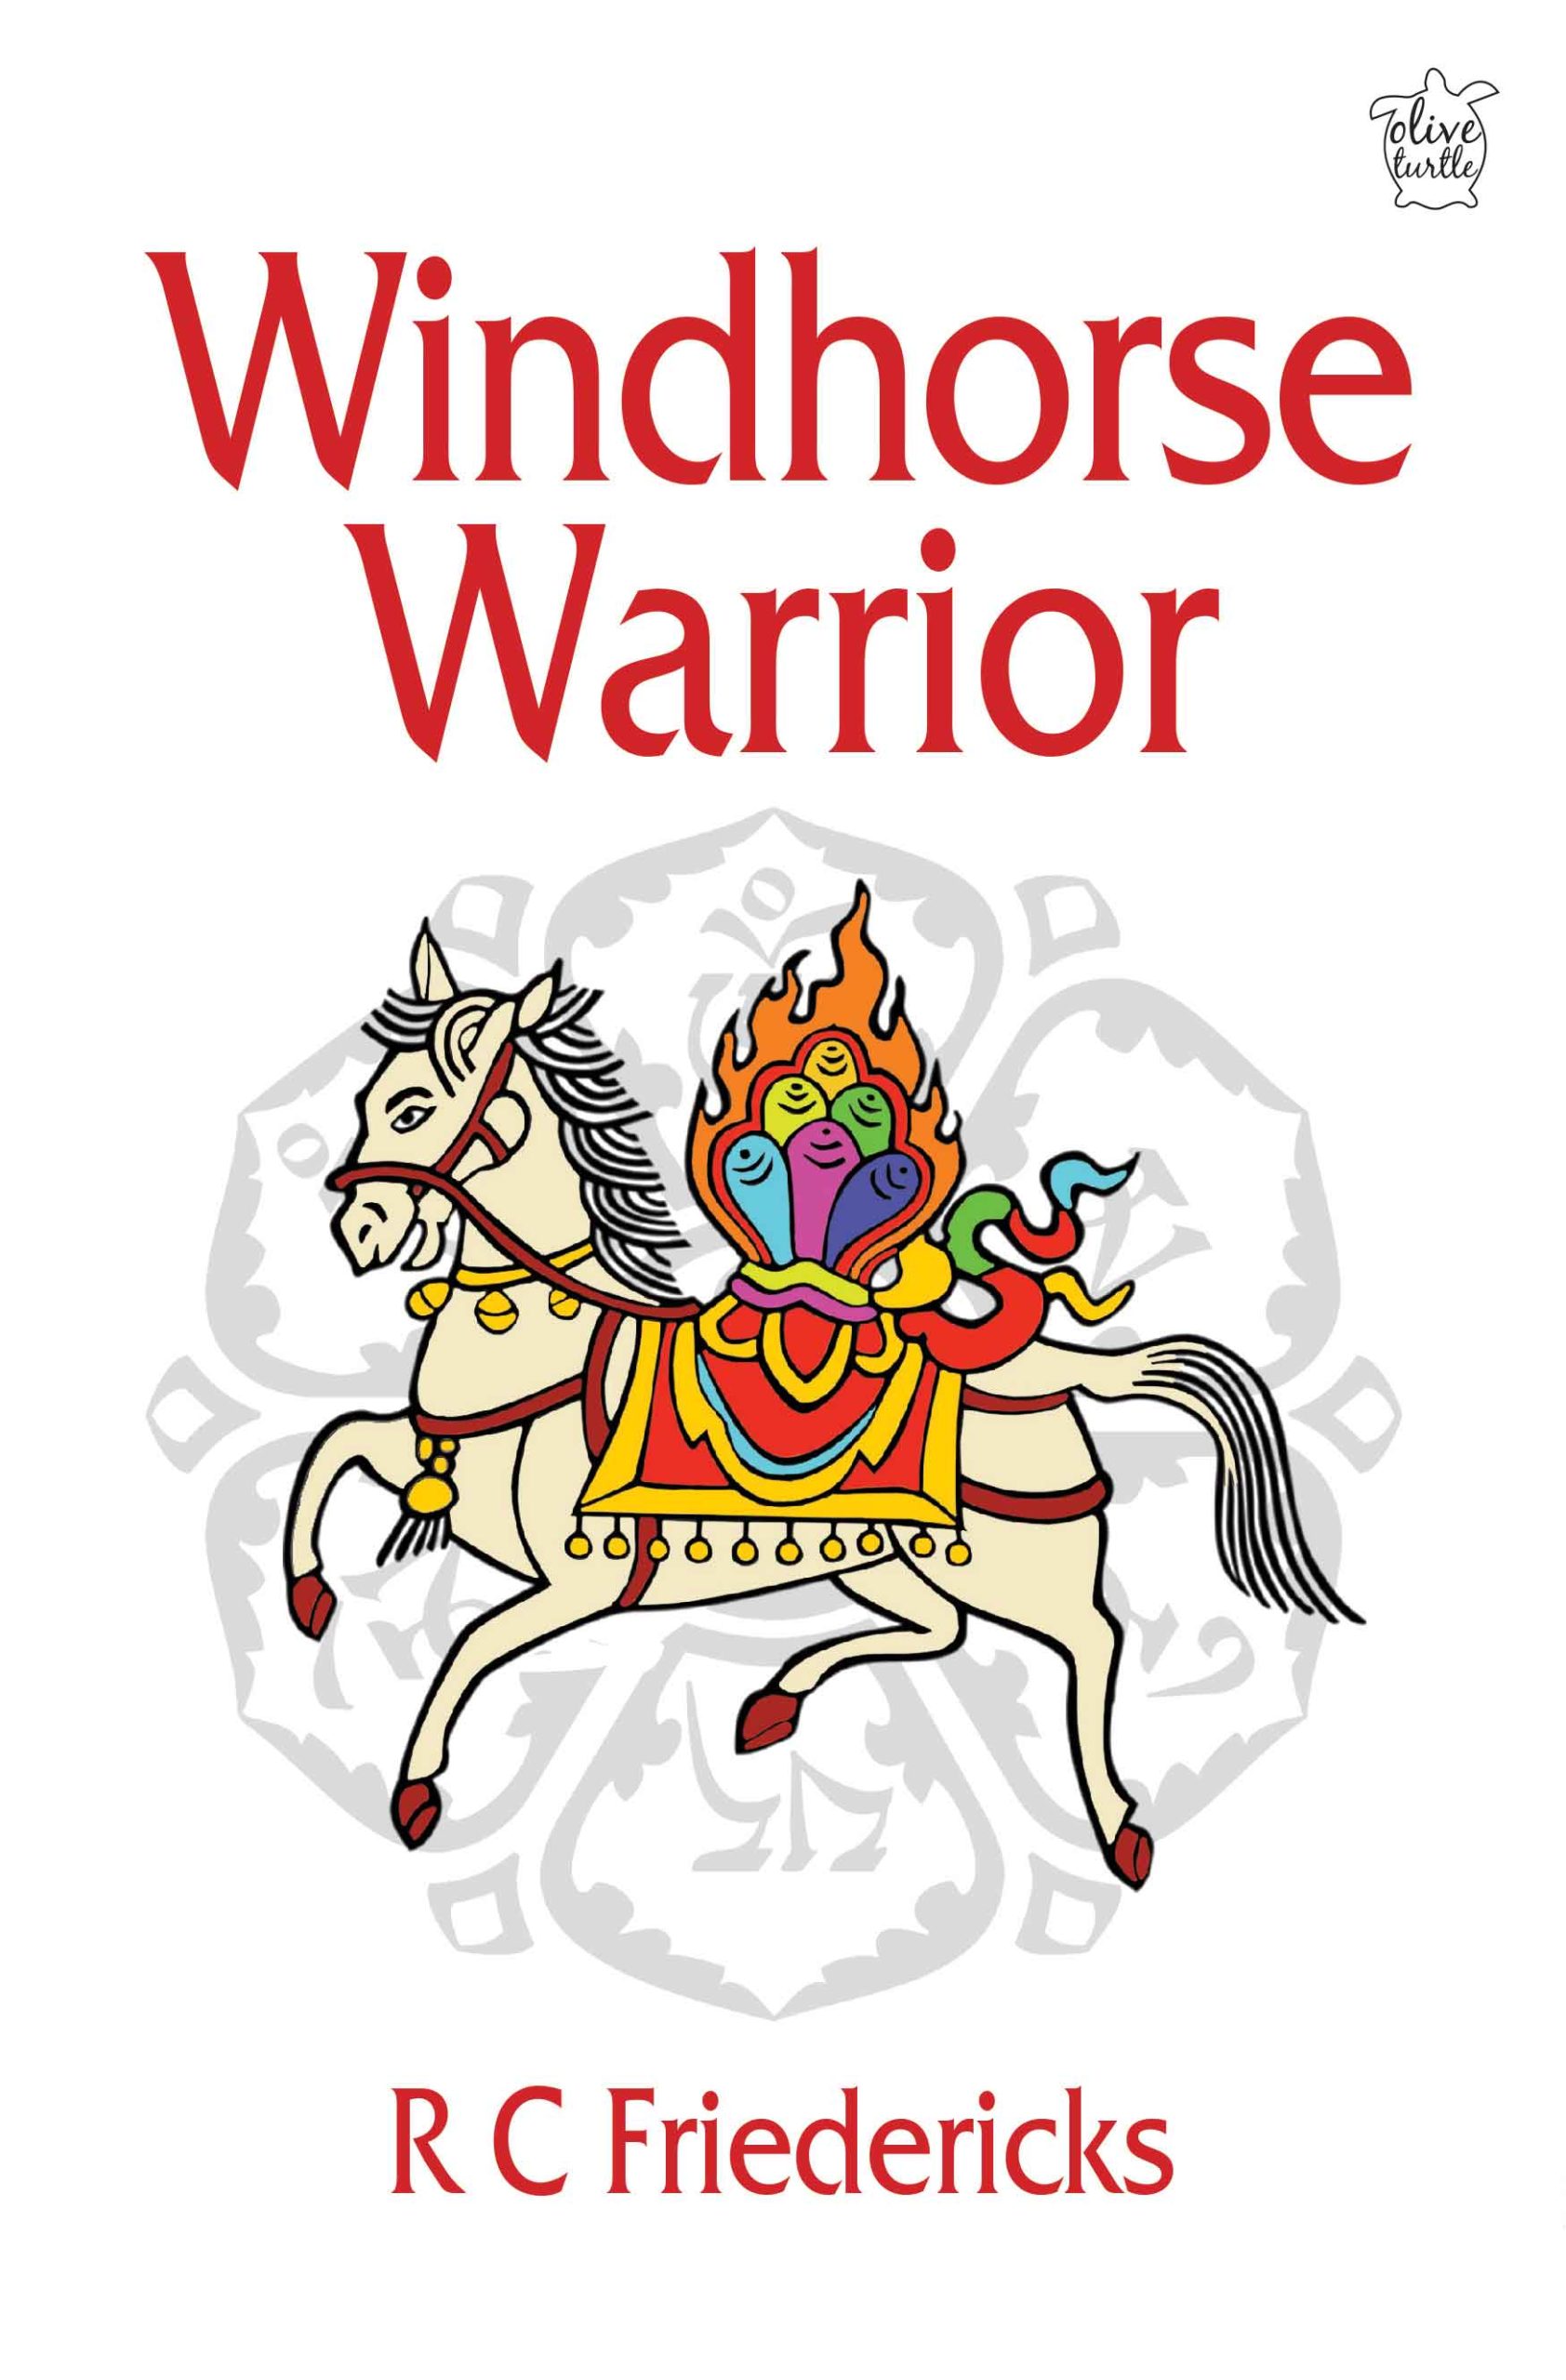 Windhorse Warrior WEB scaled